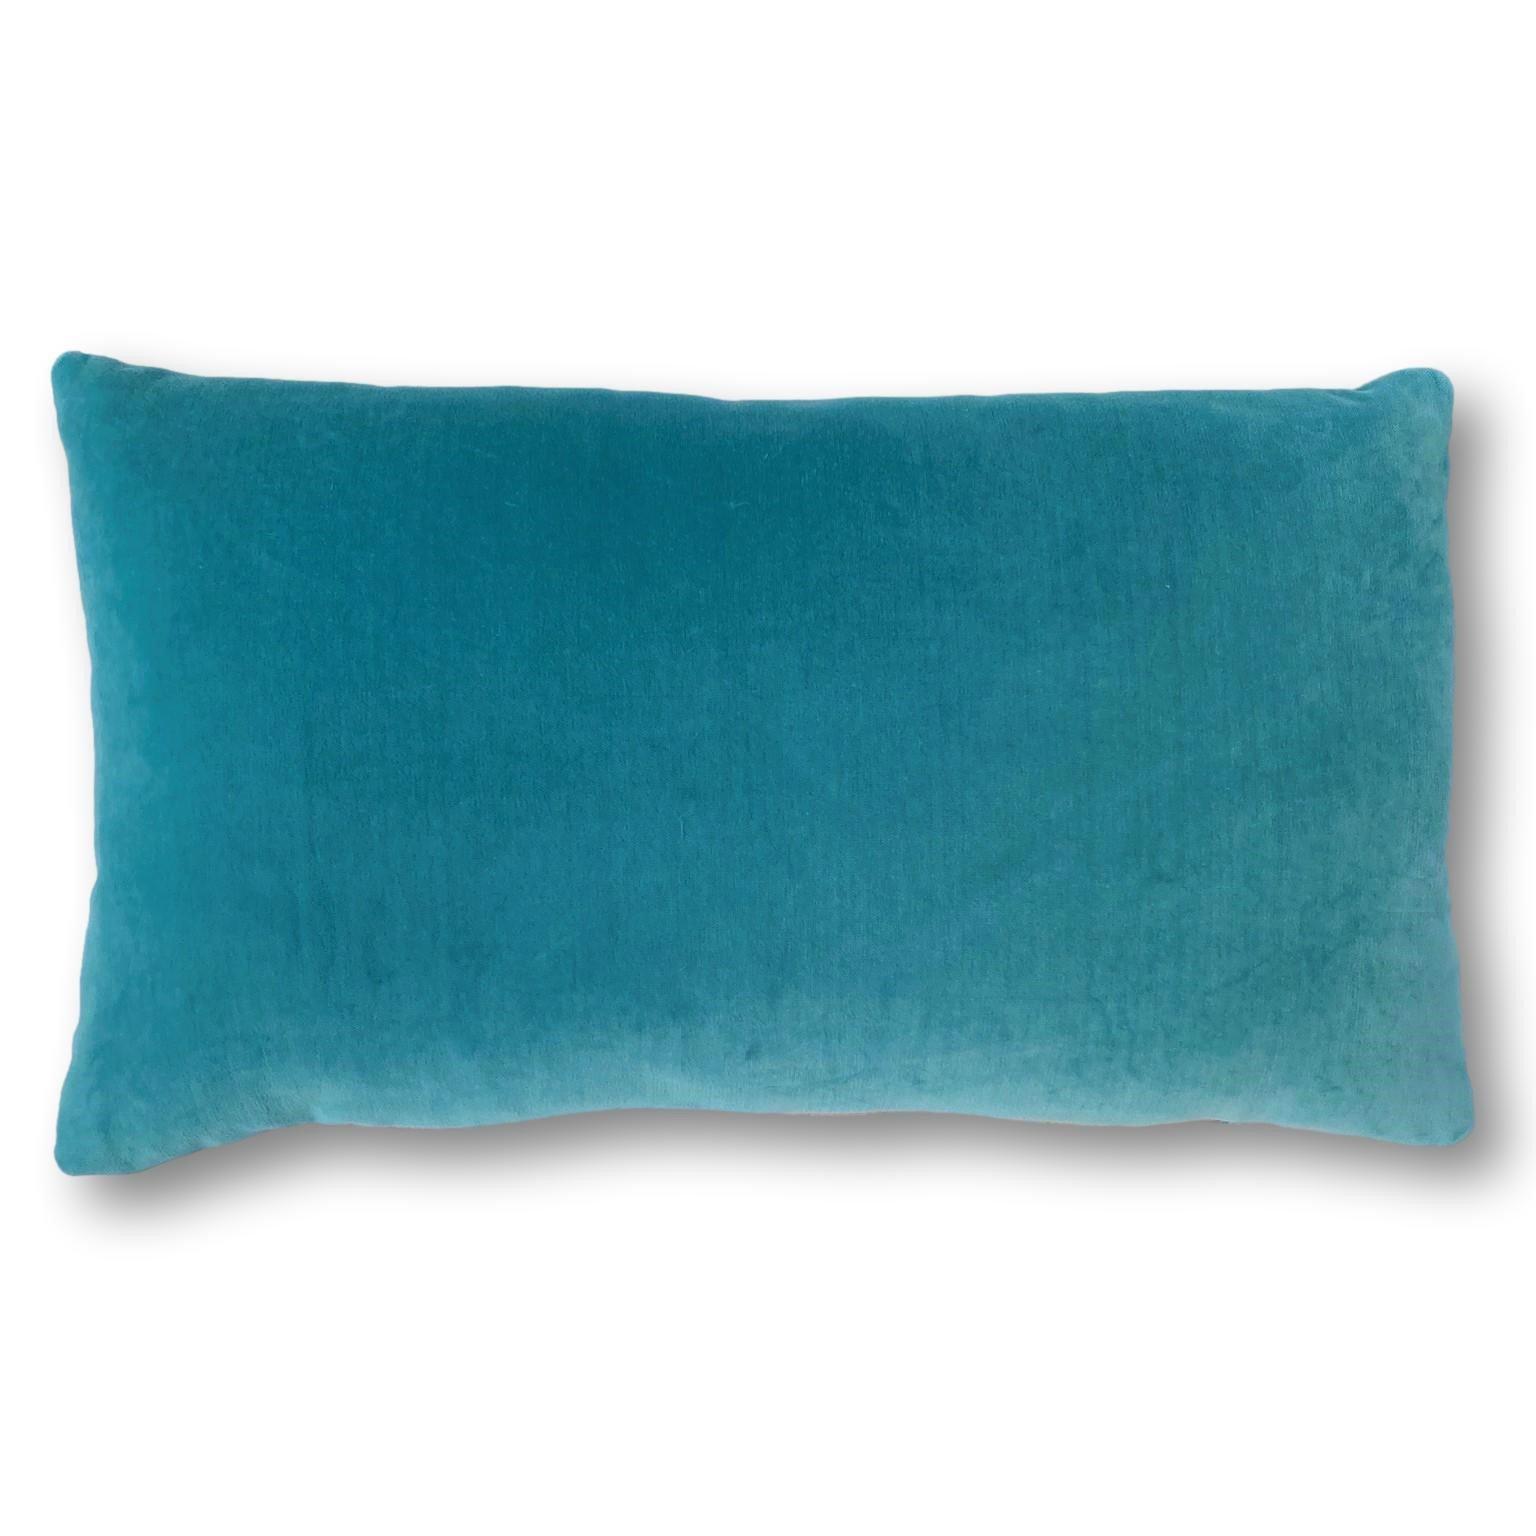 extra large cushion covers - turquoise